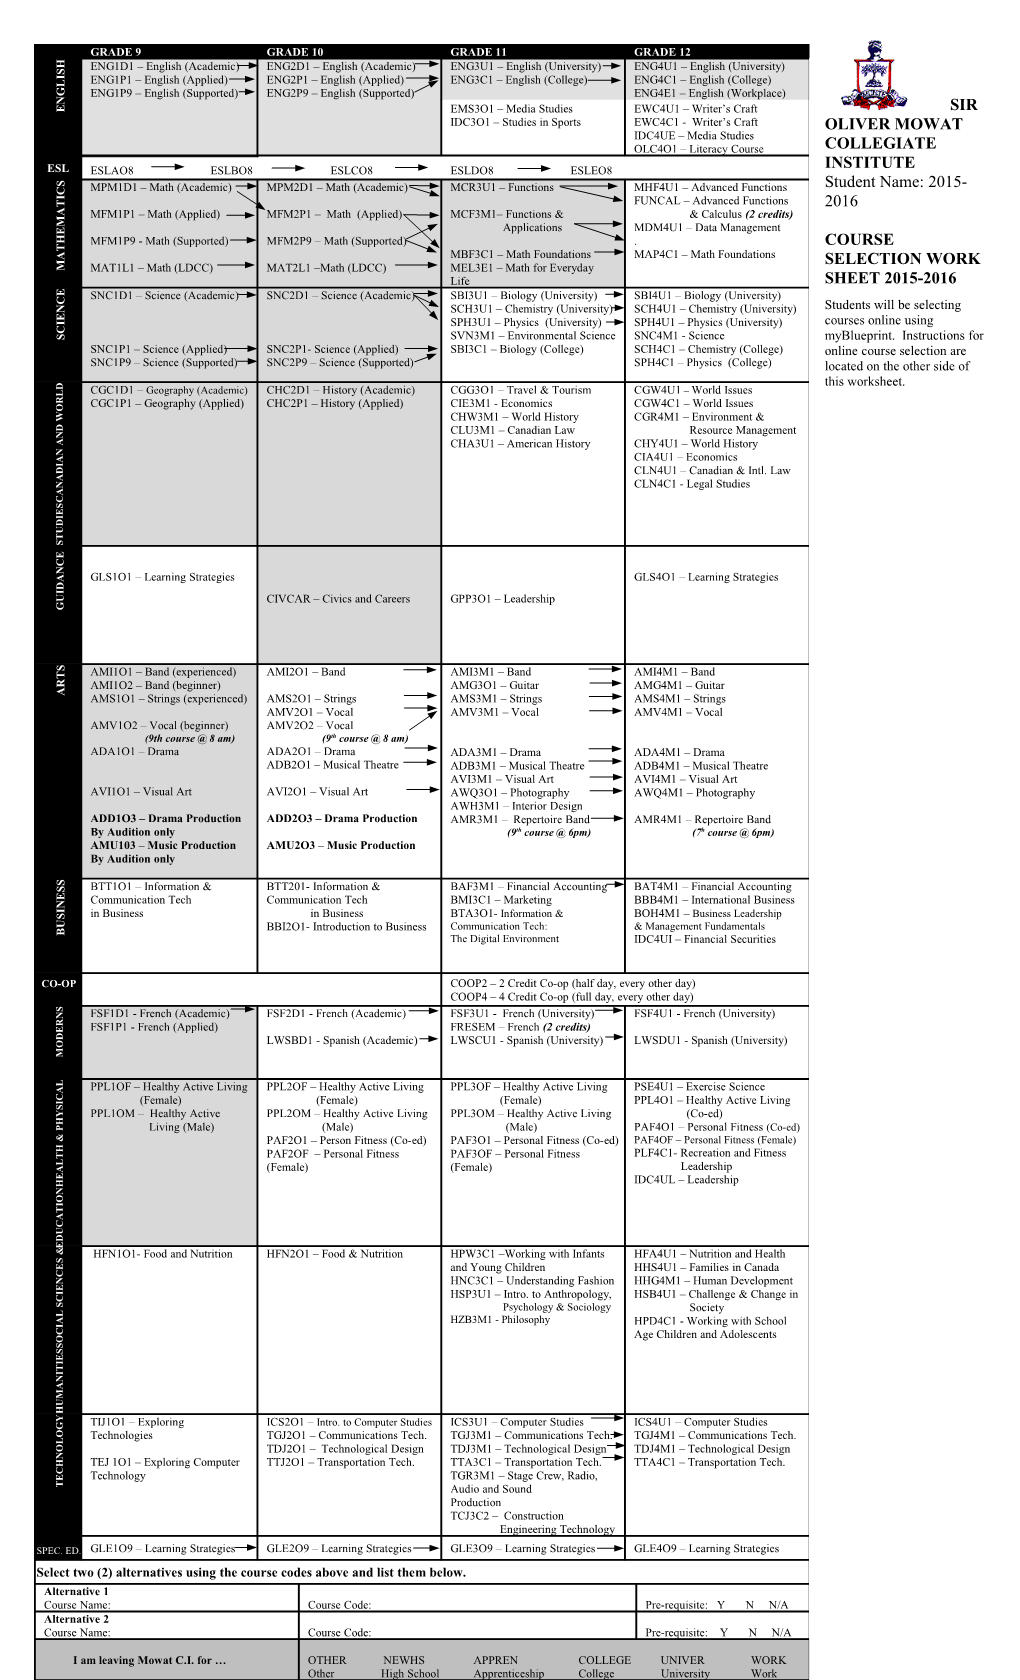 Course Selection Work Sheet 2015-2016